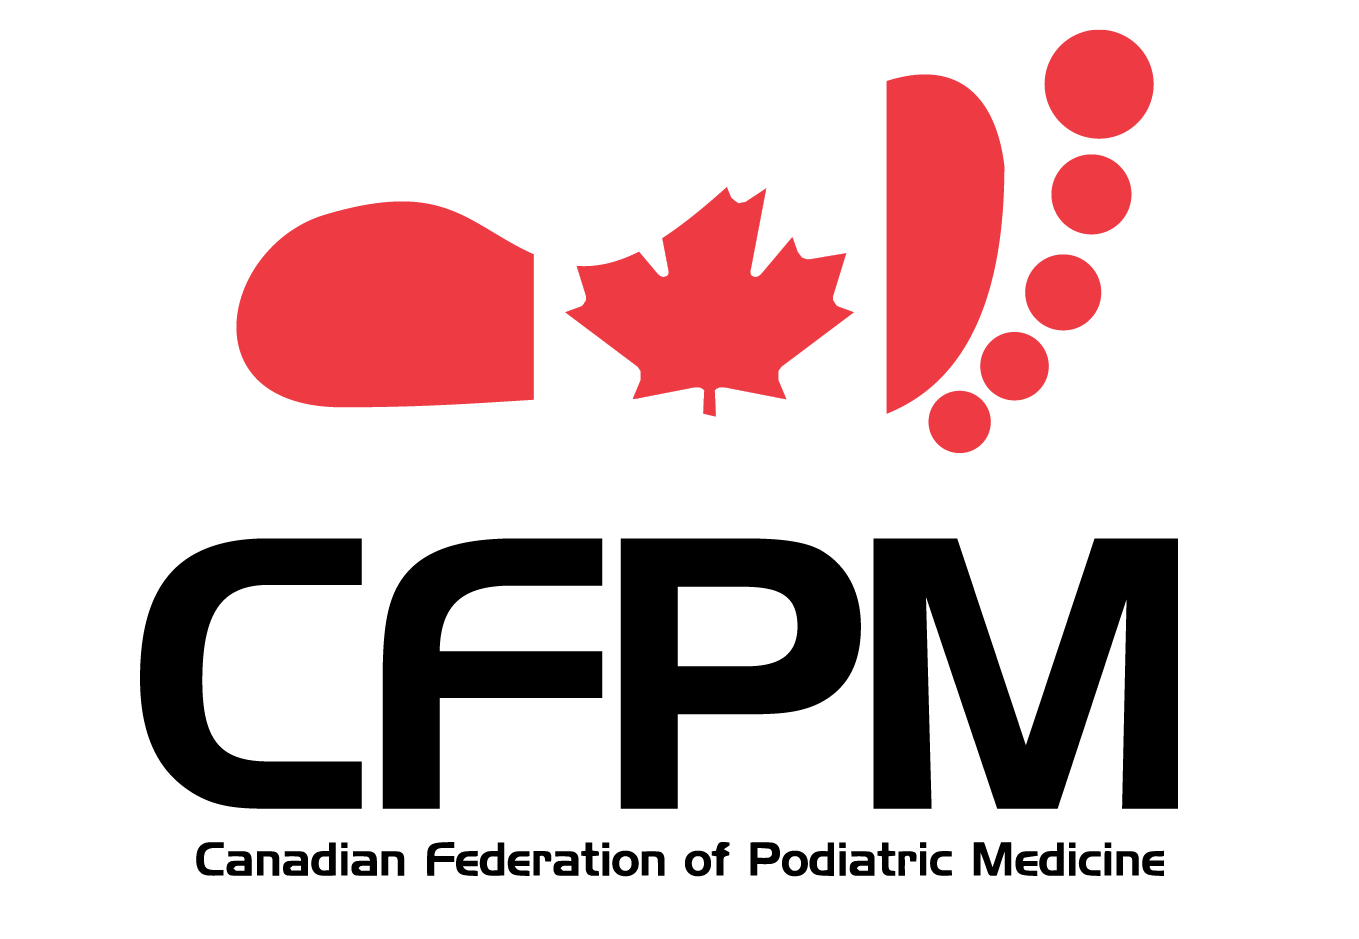 Canadian Federation of Podiatric Medicine